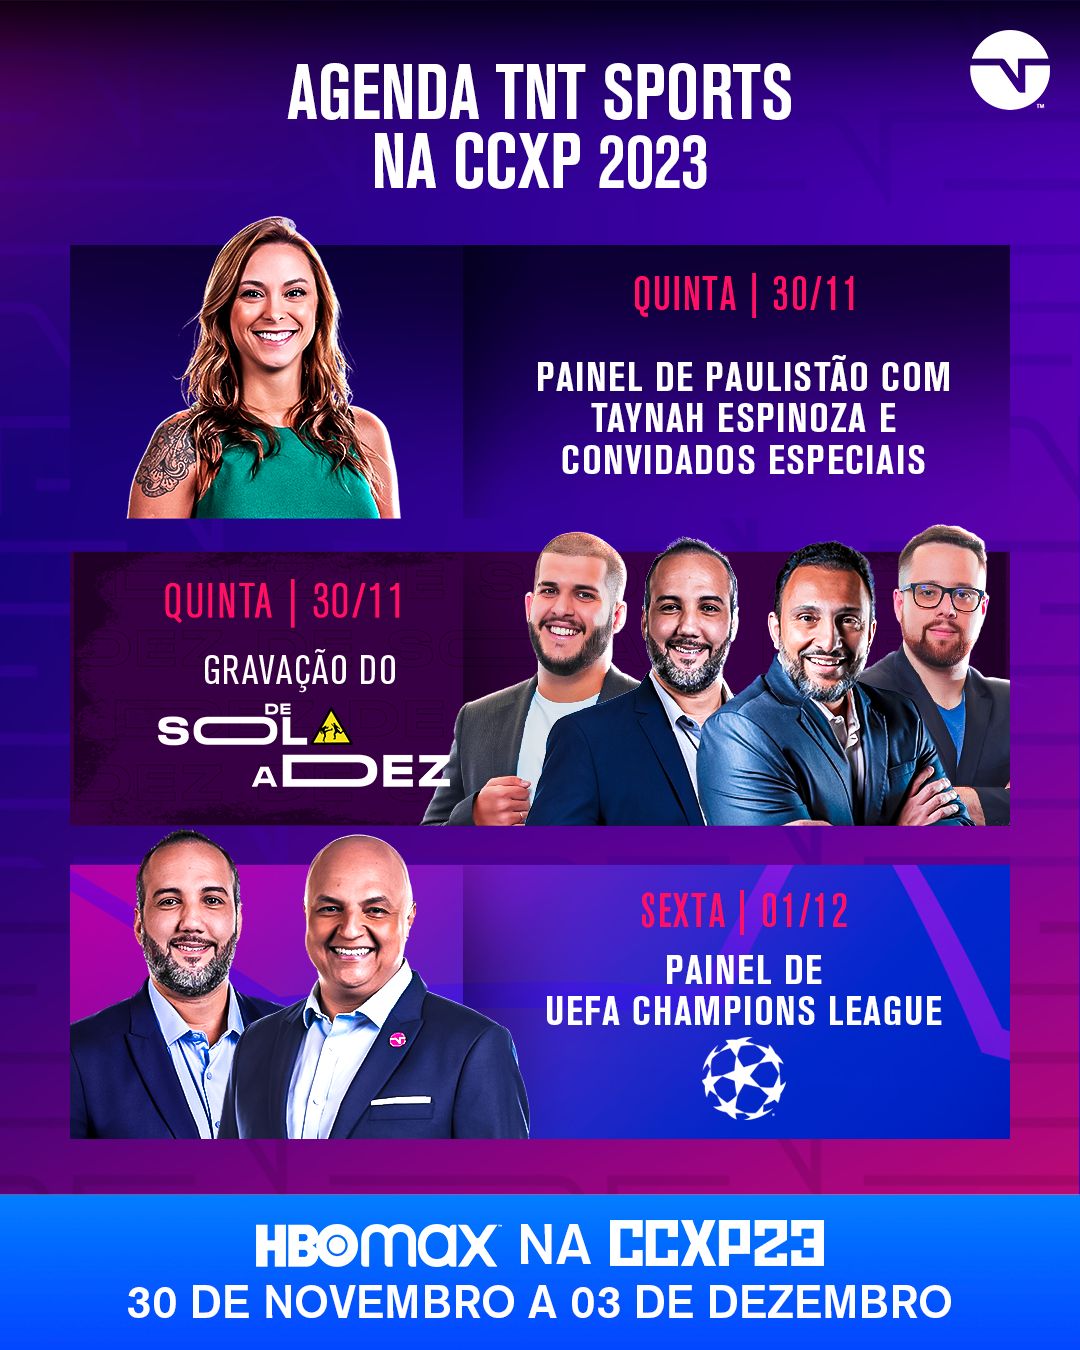 Warner Bros. Discovery to showcase Campeonato Paulista on TNT